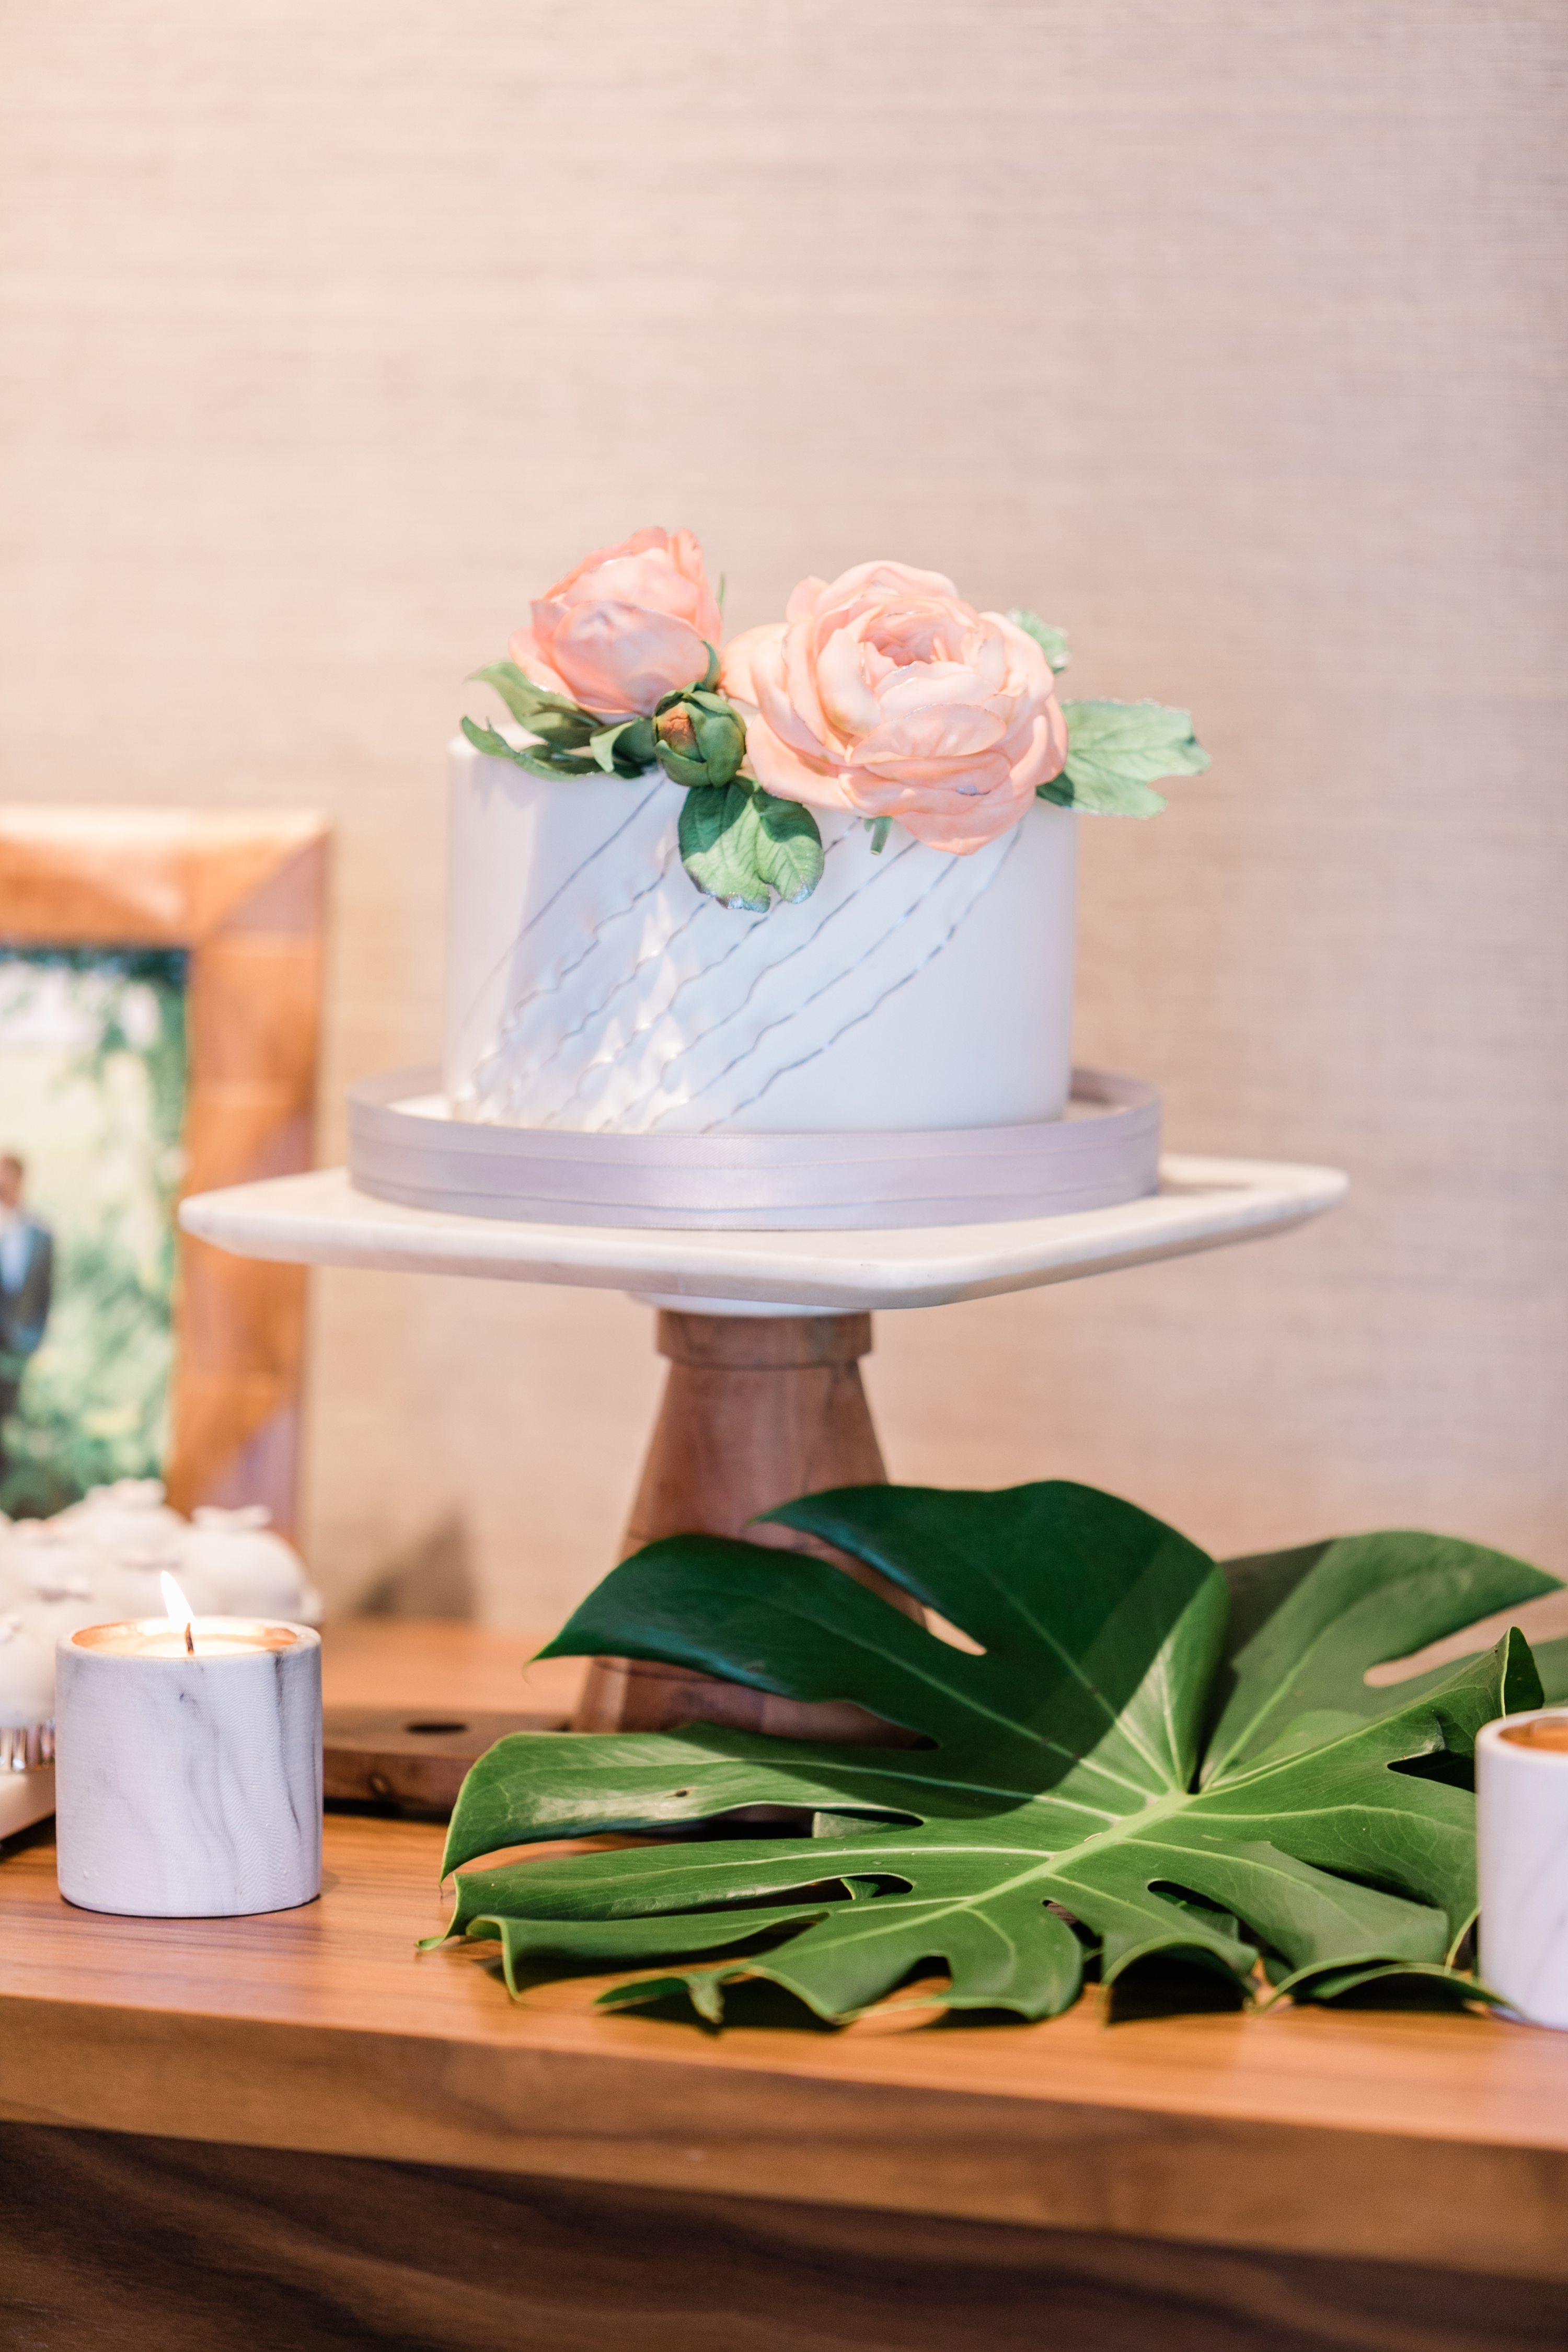  idaho weddings,wedding cake,wedding cake topper,wedding cake design